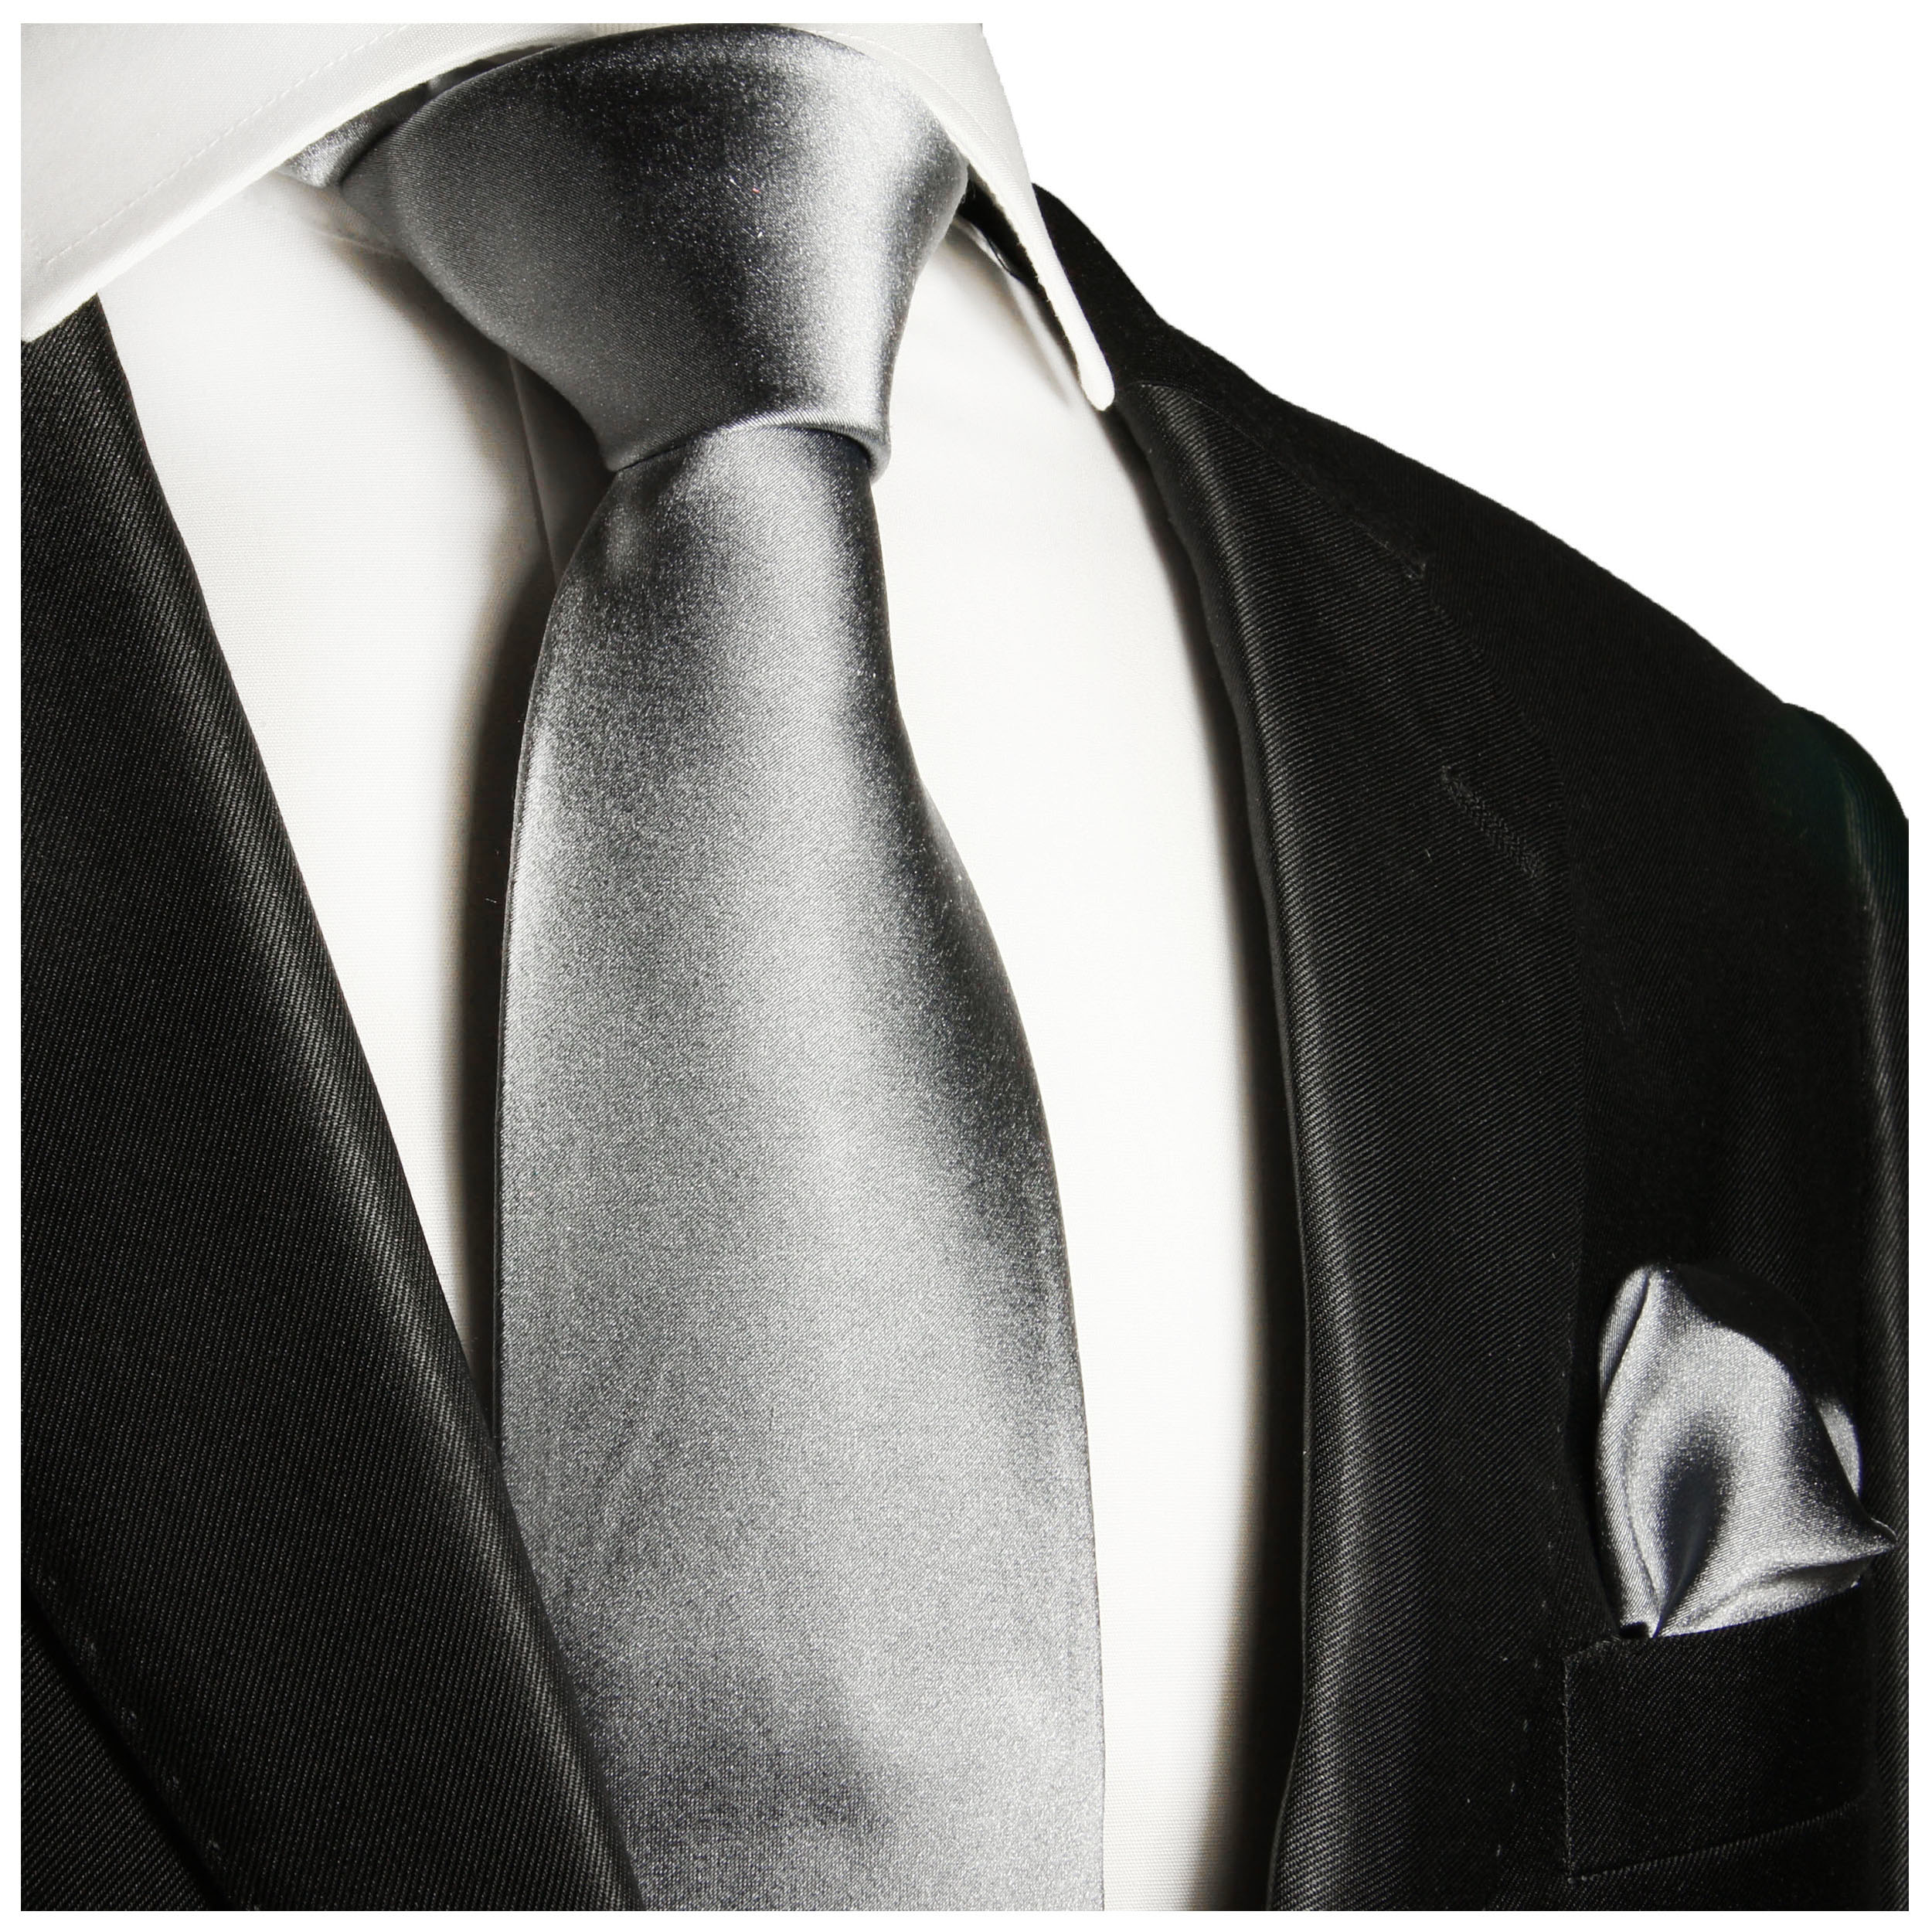 Krawatte silber grau uni satin | JETZT BESTELLEN - Paul Malone Shop